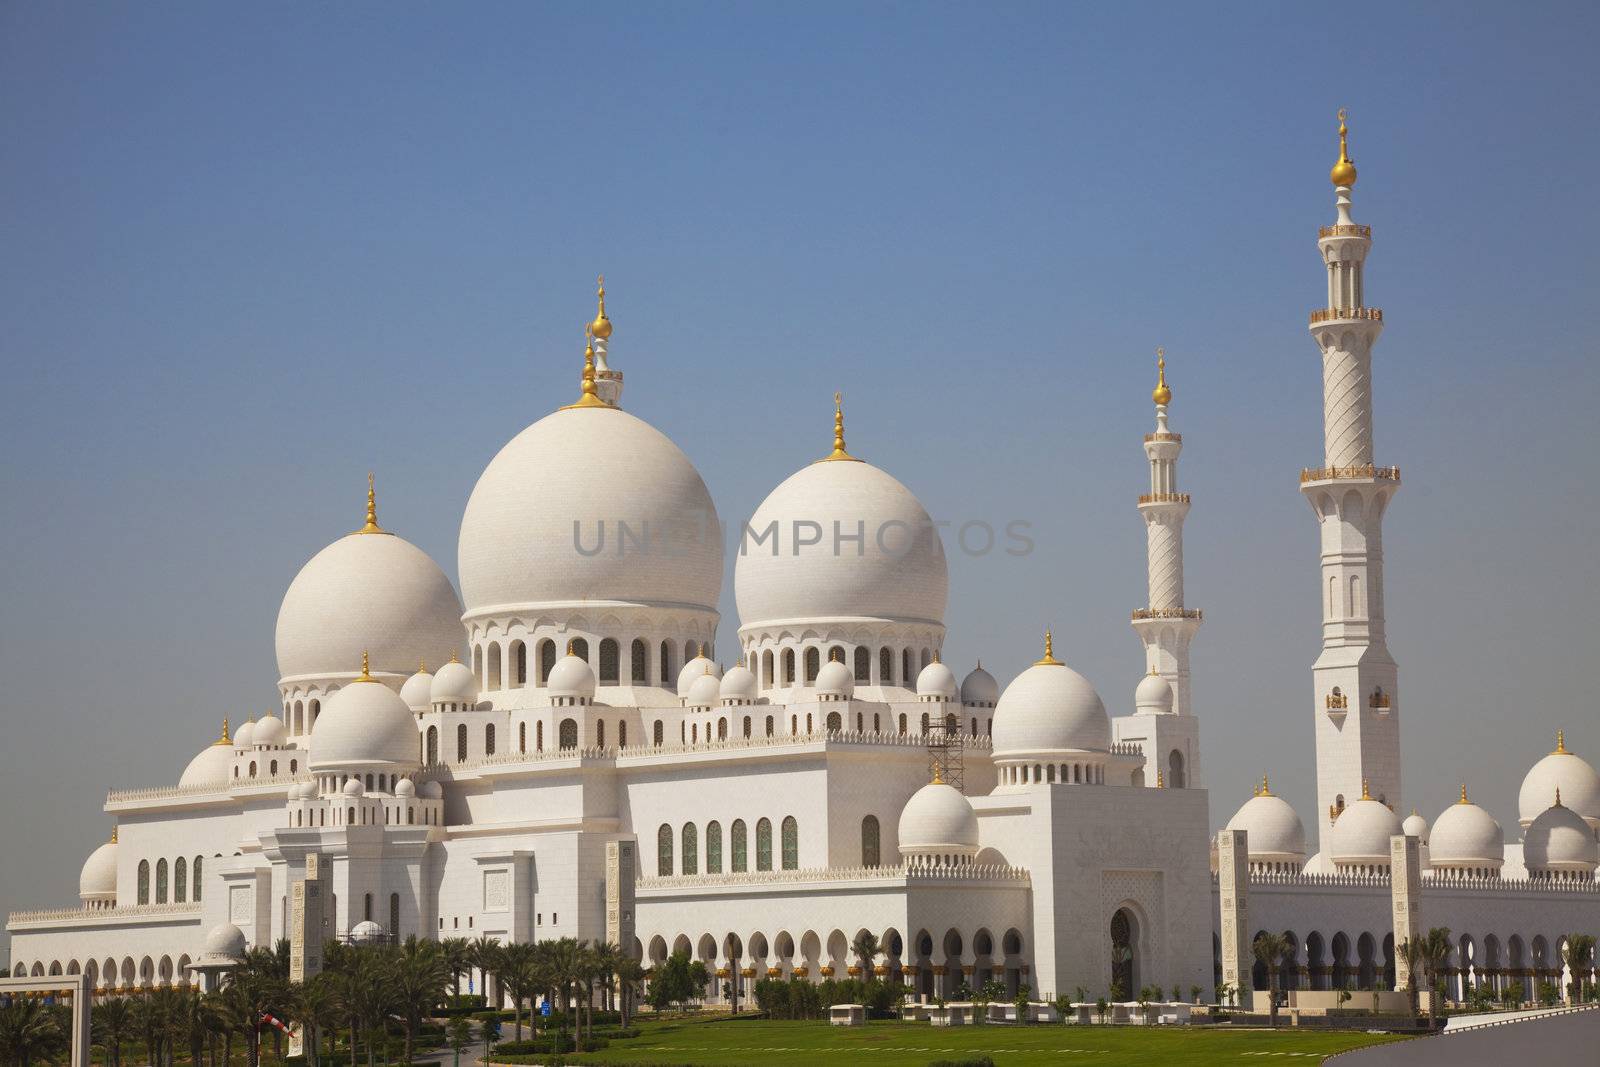 Image of the Grand Mosque, Abu Dhabi, UAE.
